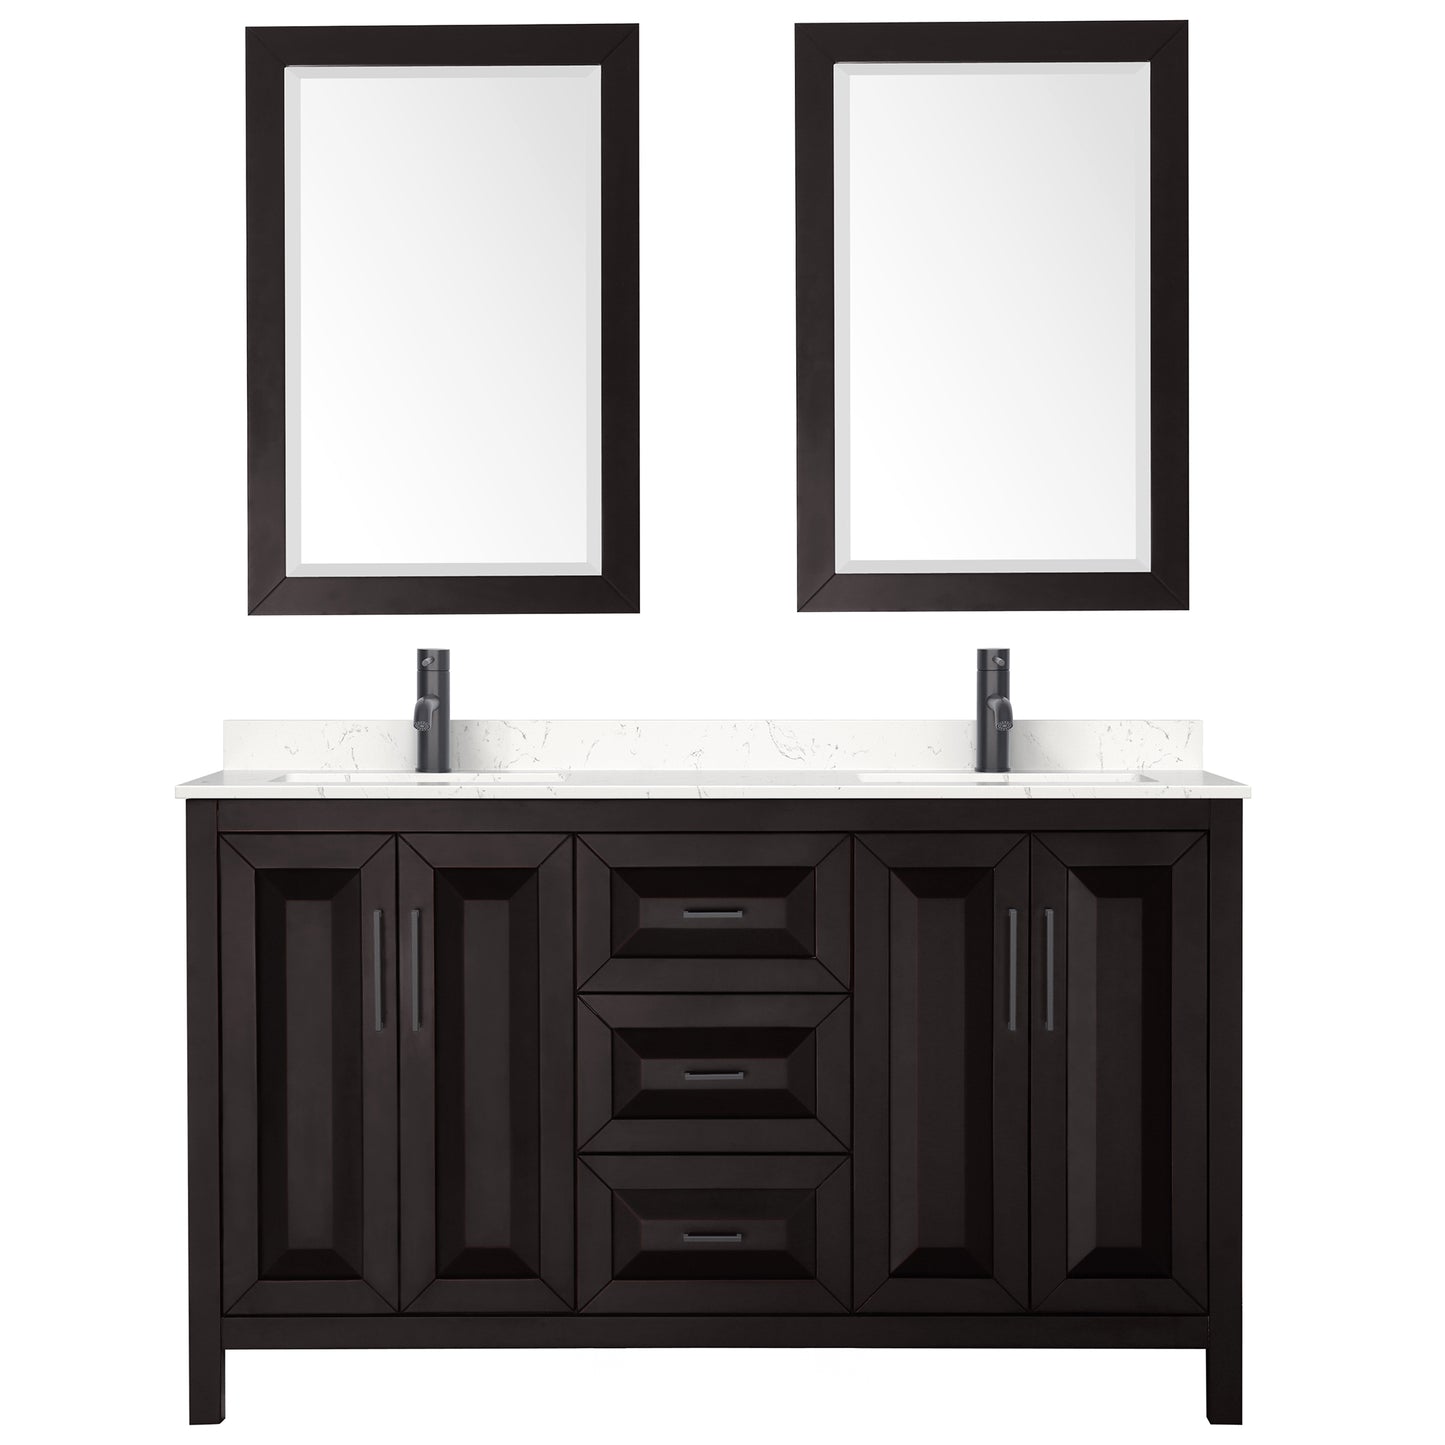 Wyndham Daria 60 Inch Double Bathroom Vanity Light-Vein Carrara Cultured Marble Countertop, Undermount Square Sinks in Matte Black Trim with 24 Inch Mirrors - Luxe Bathroom Vanities